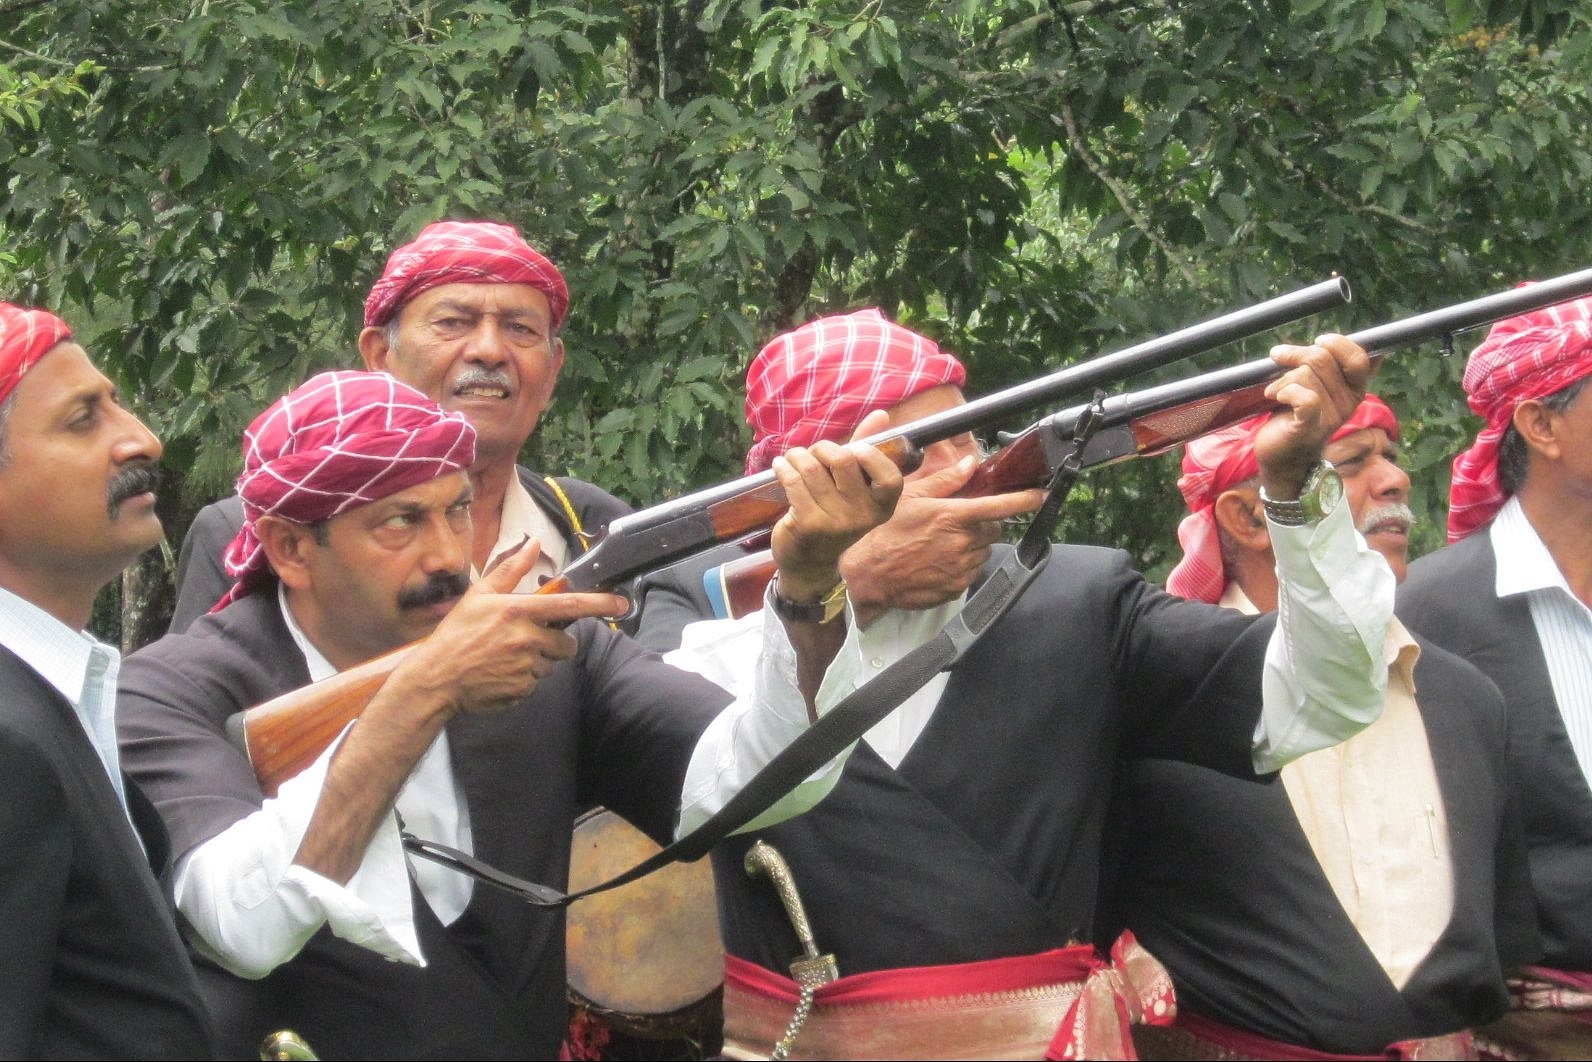 Kodavas with their guns.